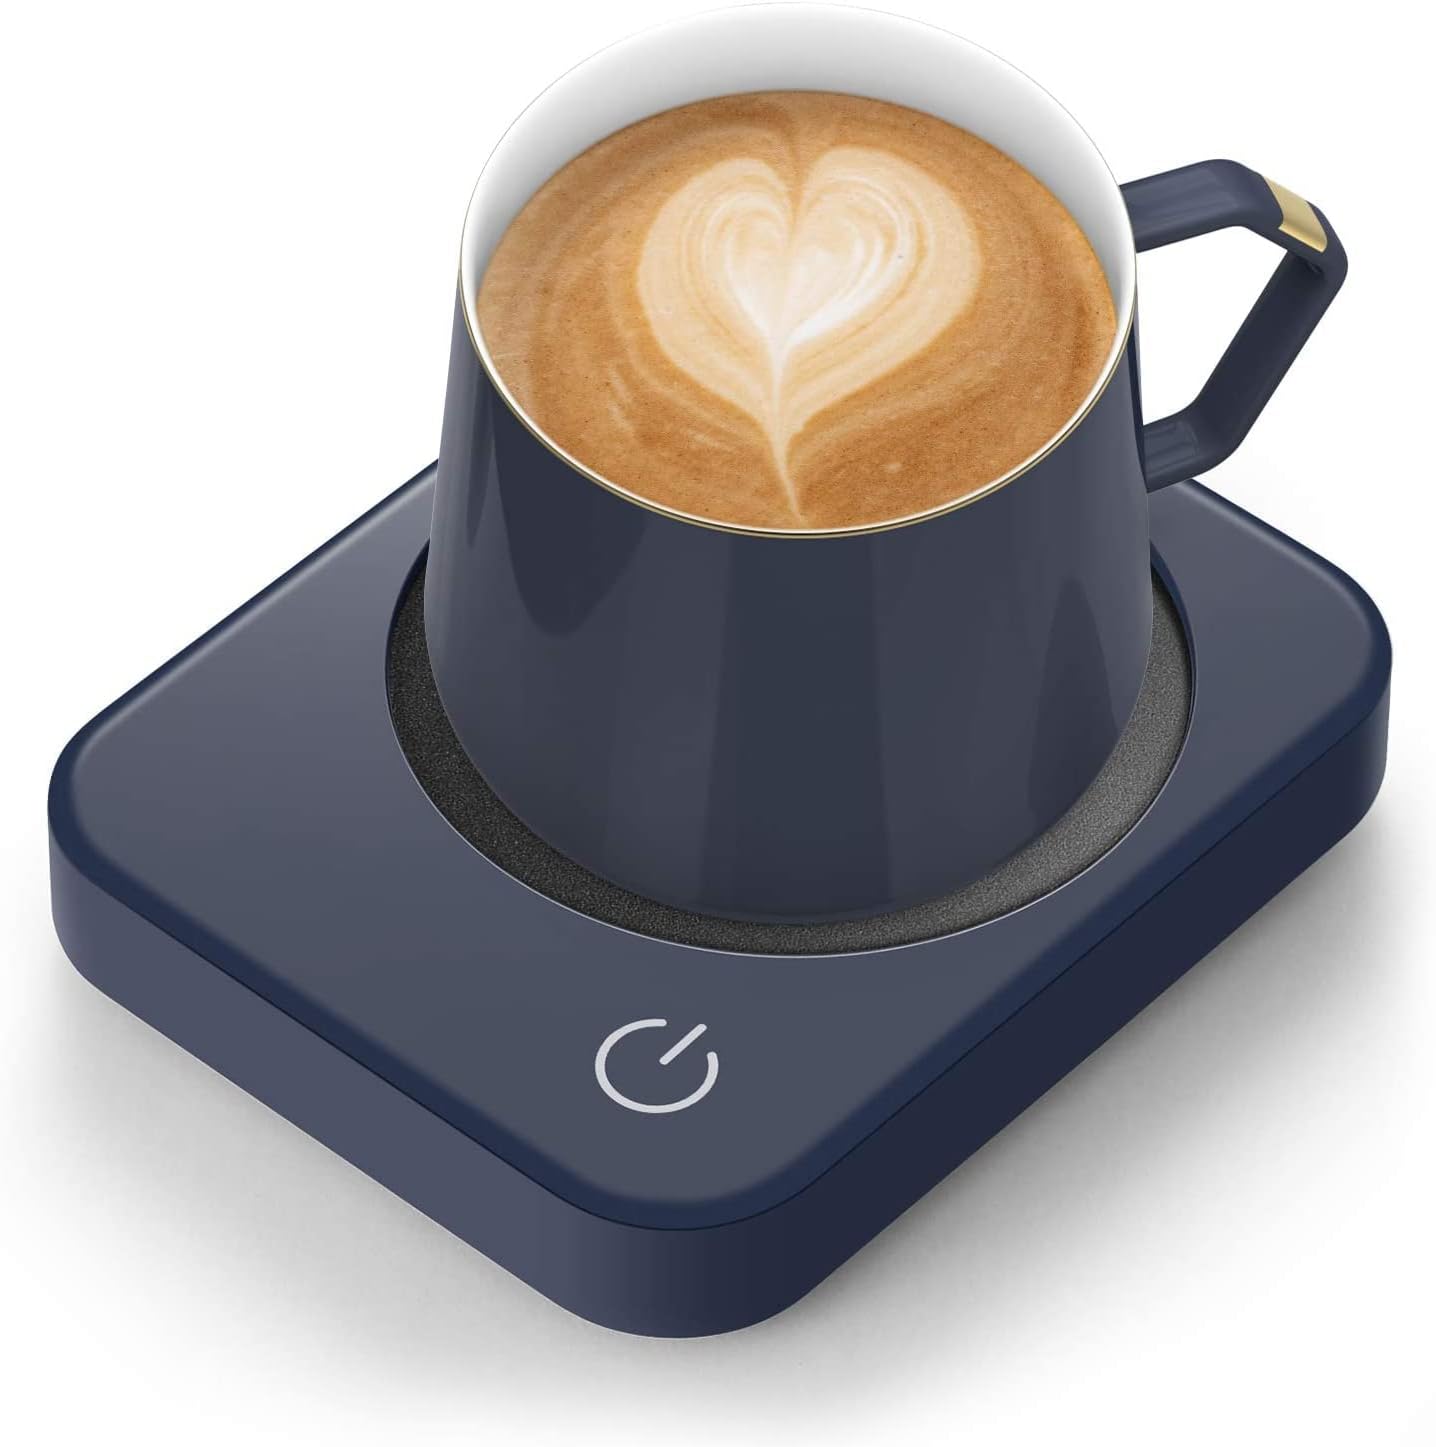 ANBANGLIN Coffee Mug Warmer, Coffee Warmer for Desk with Auto Shut Off, Coffee Cup Warmer for Coffee Milk Tea, Candle Wax Cup Warmer Heating Plate (Dark Blue-NO Mug)